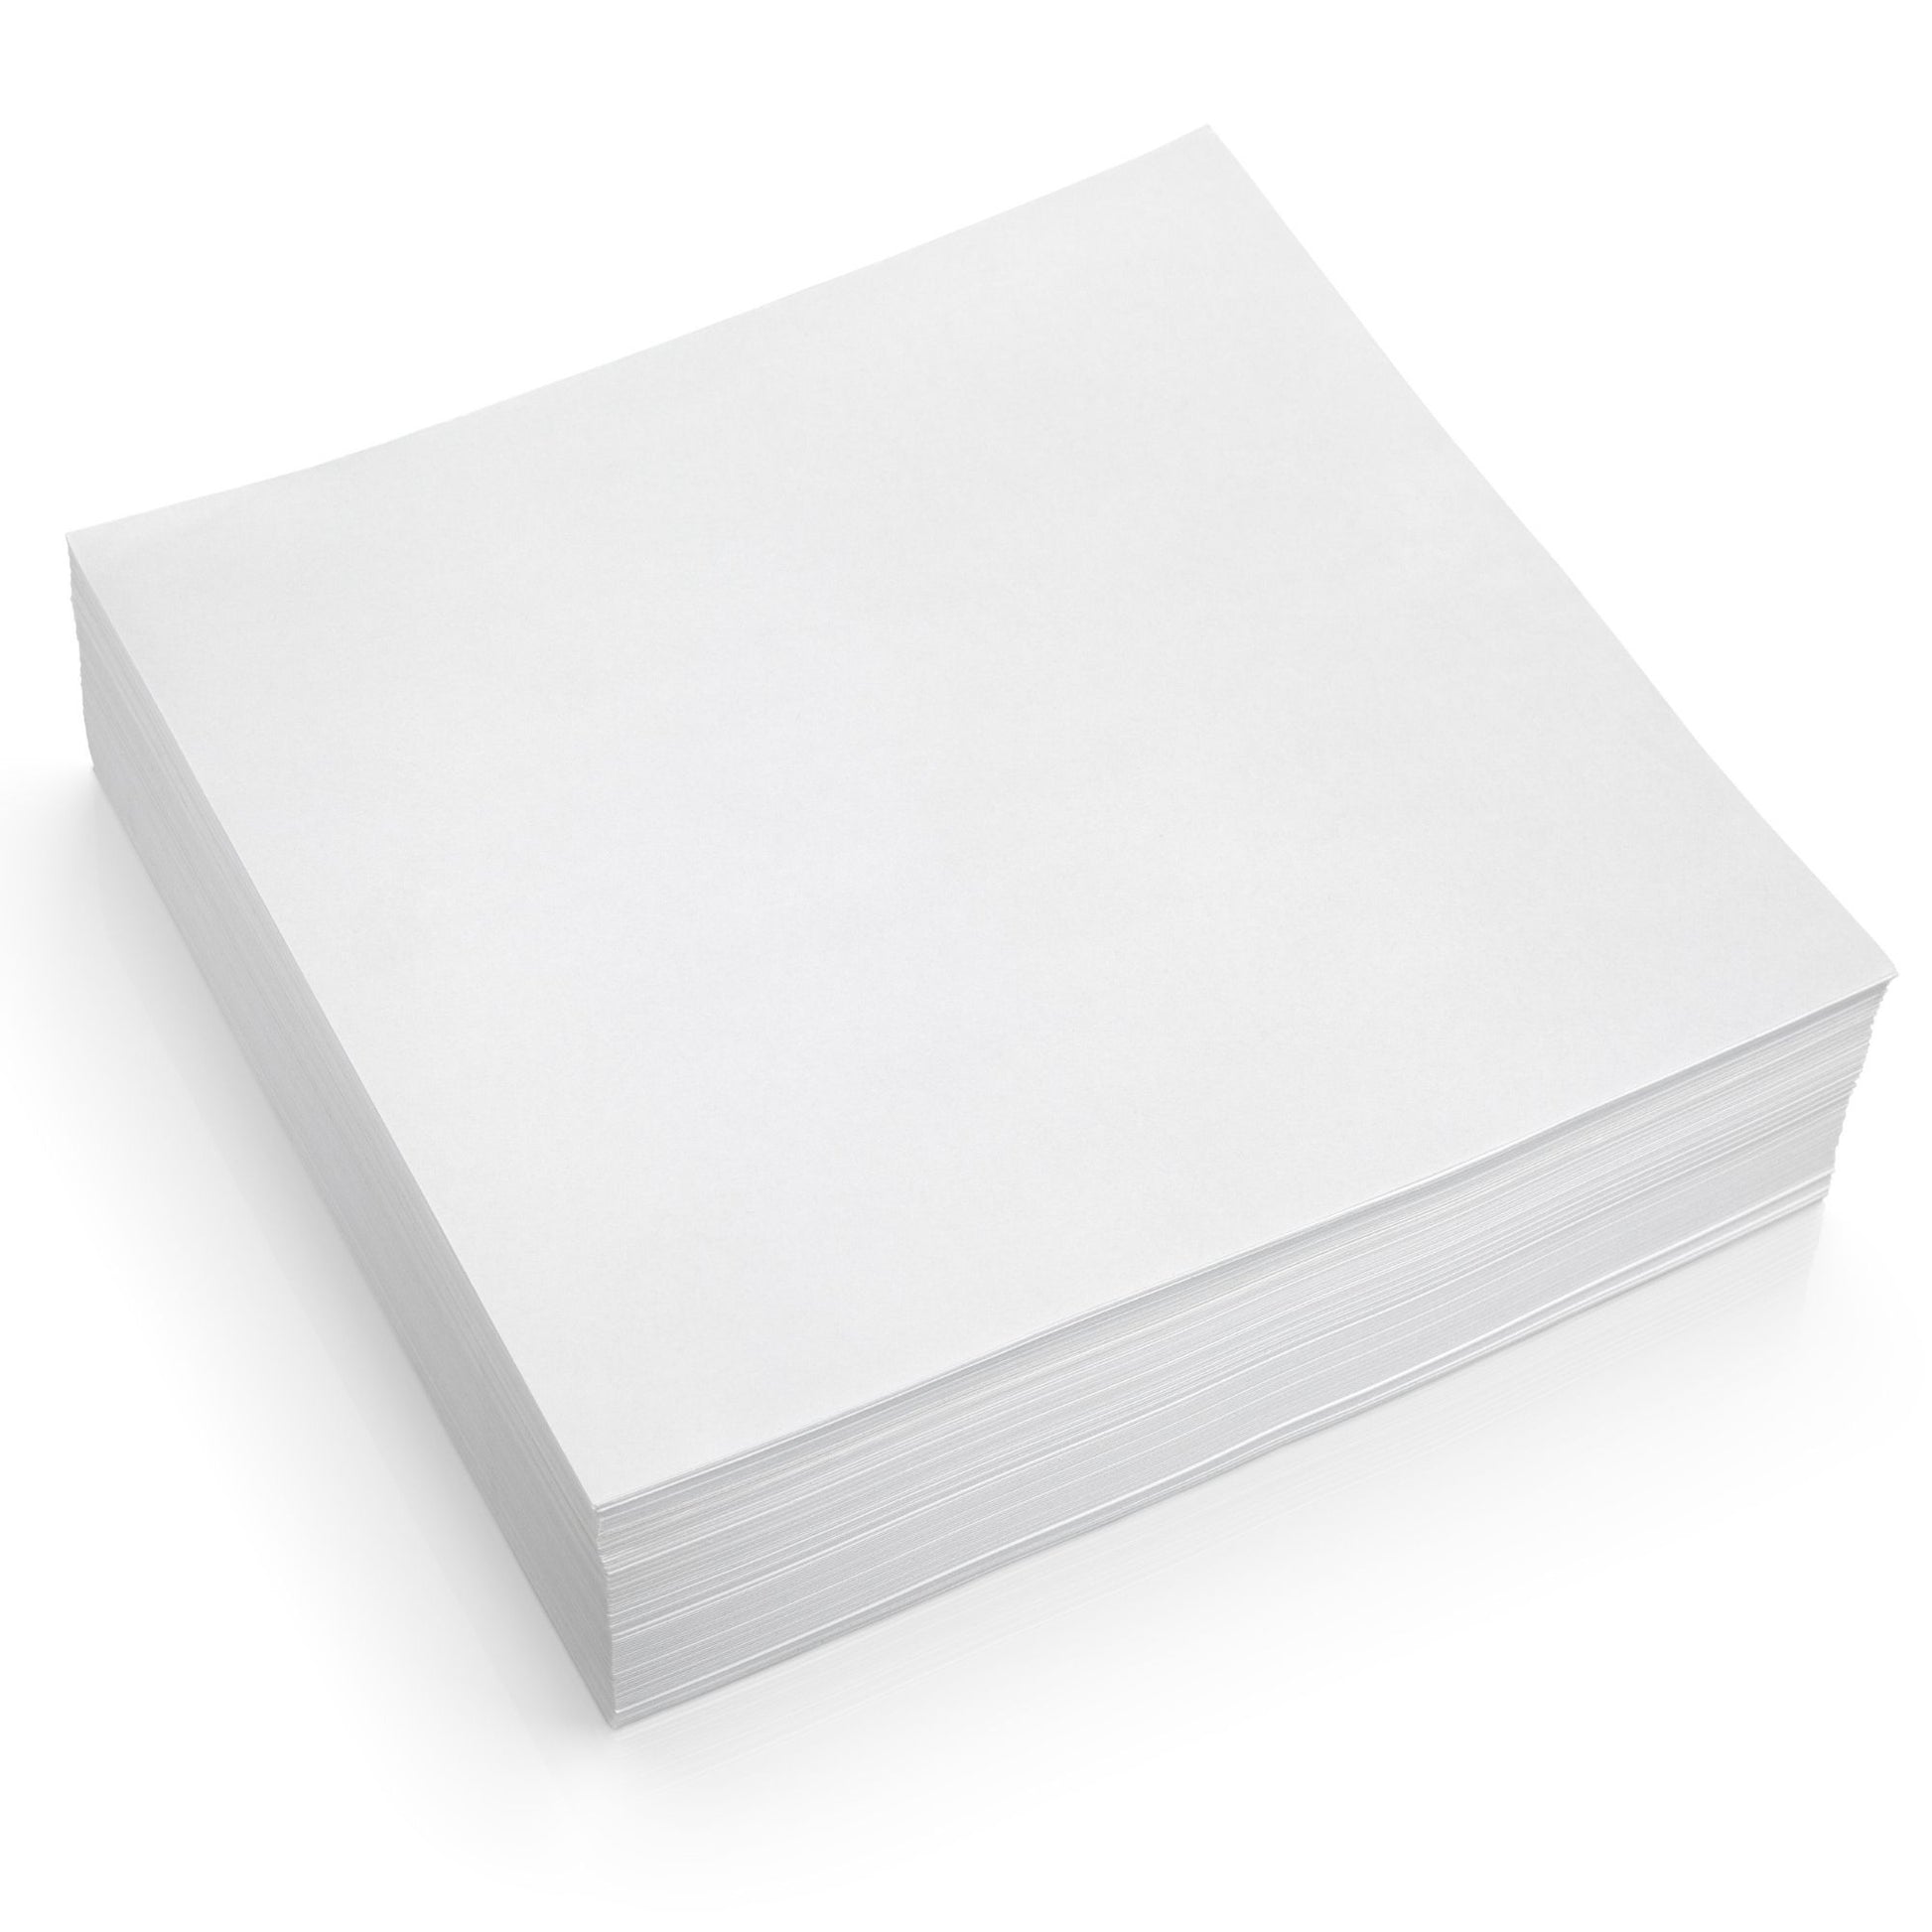 Cricut Butcher Paper Sheets, White - 12x14 15 Sheets 